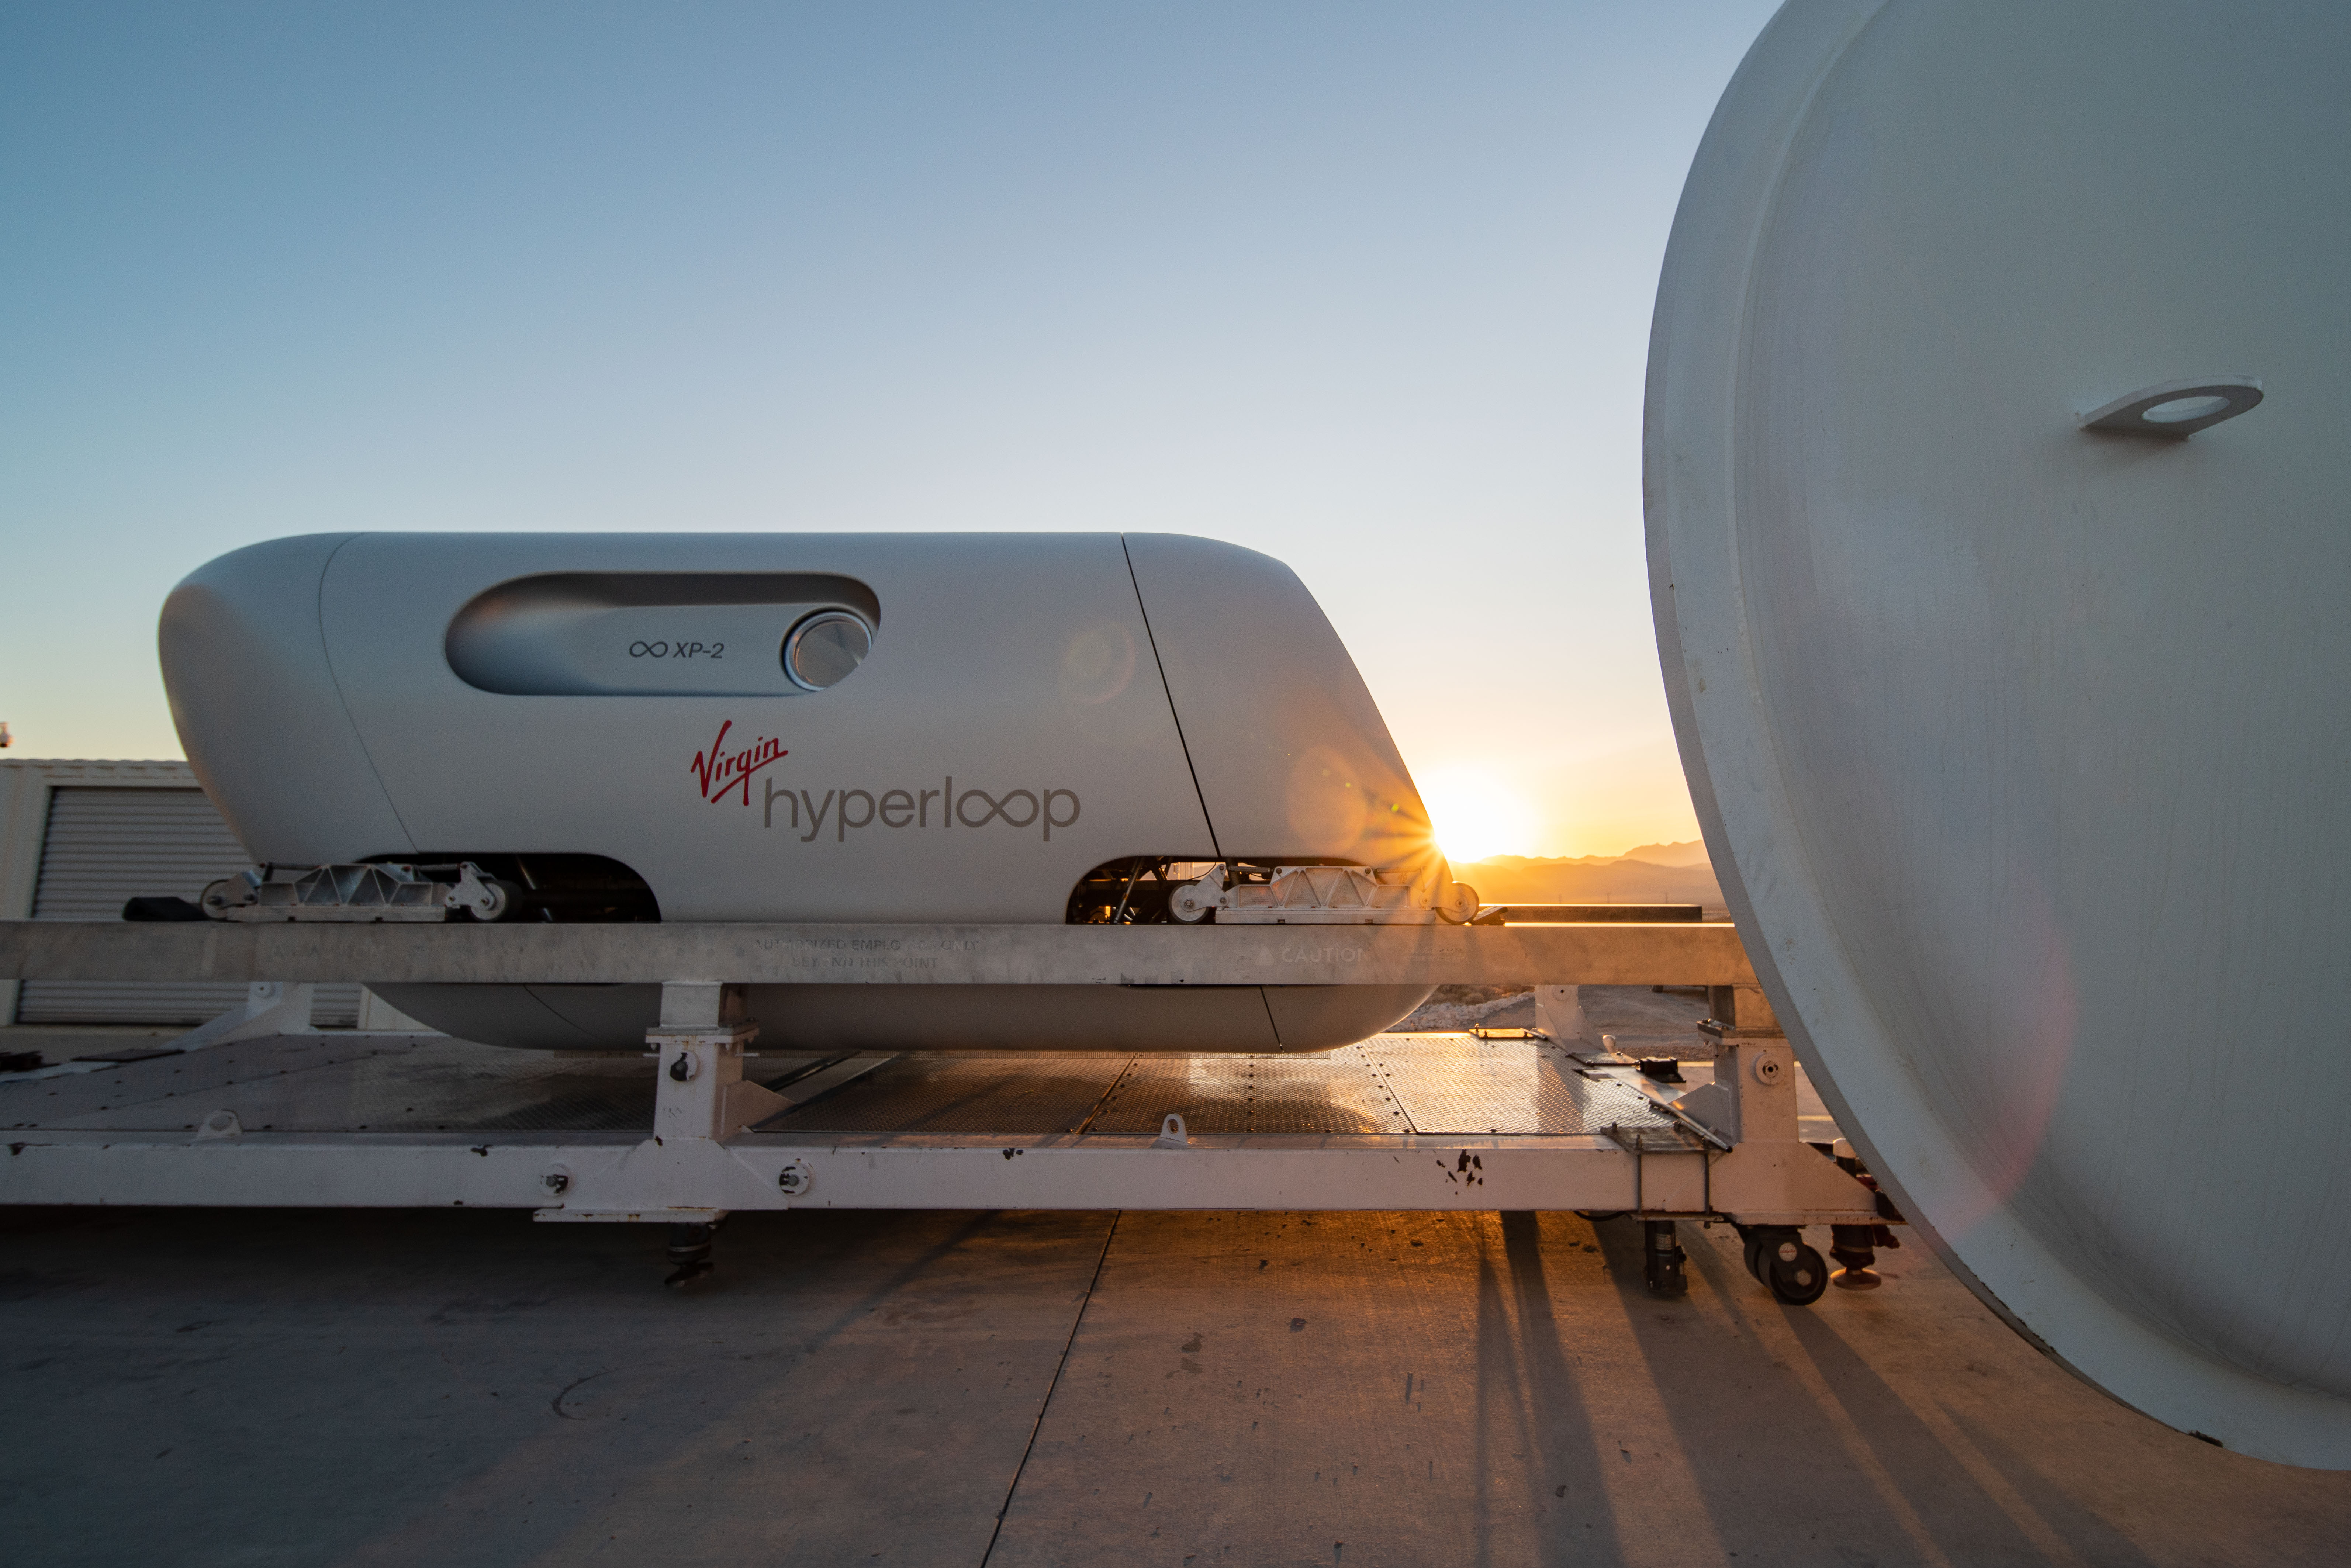 Virgin Hyperloop XP-2 vehicle can detect off-nominal states and trigger emergency responses (Credit: Virgin Hyperloop)